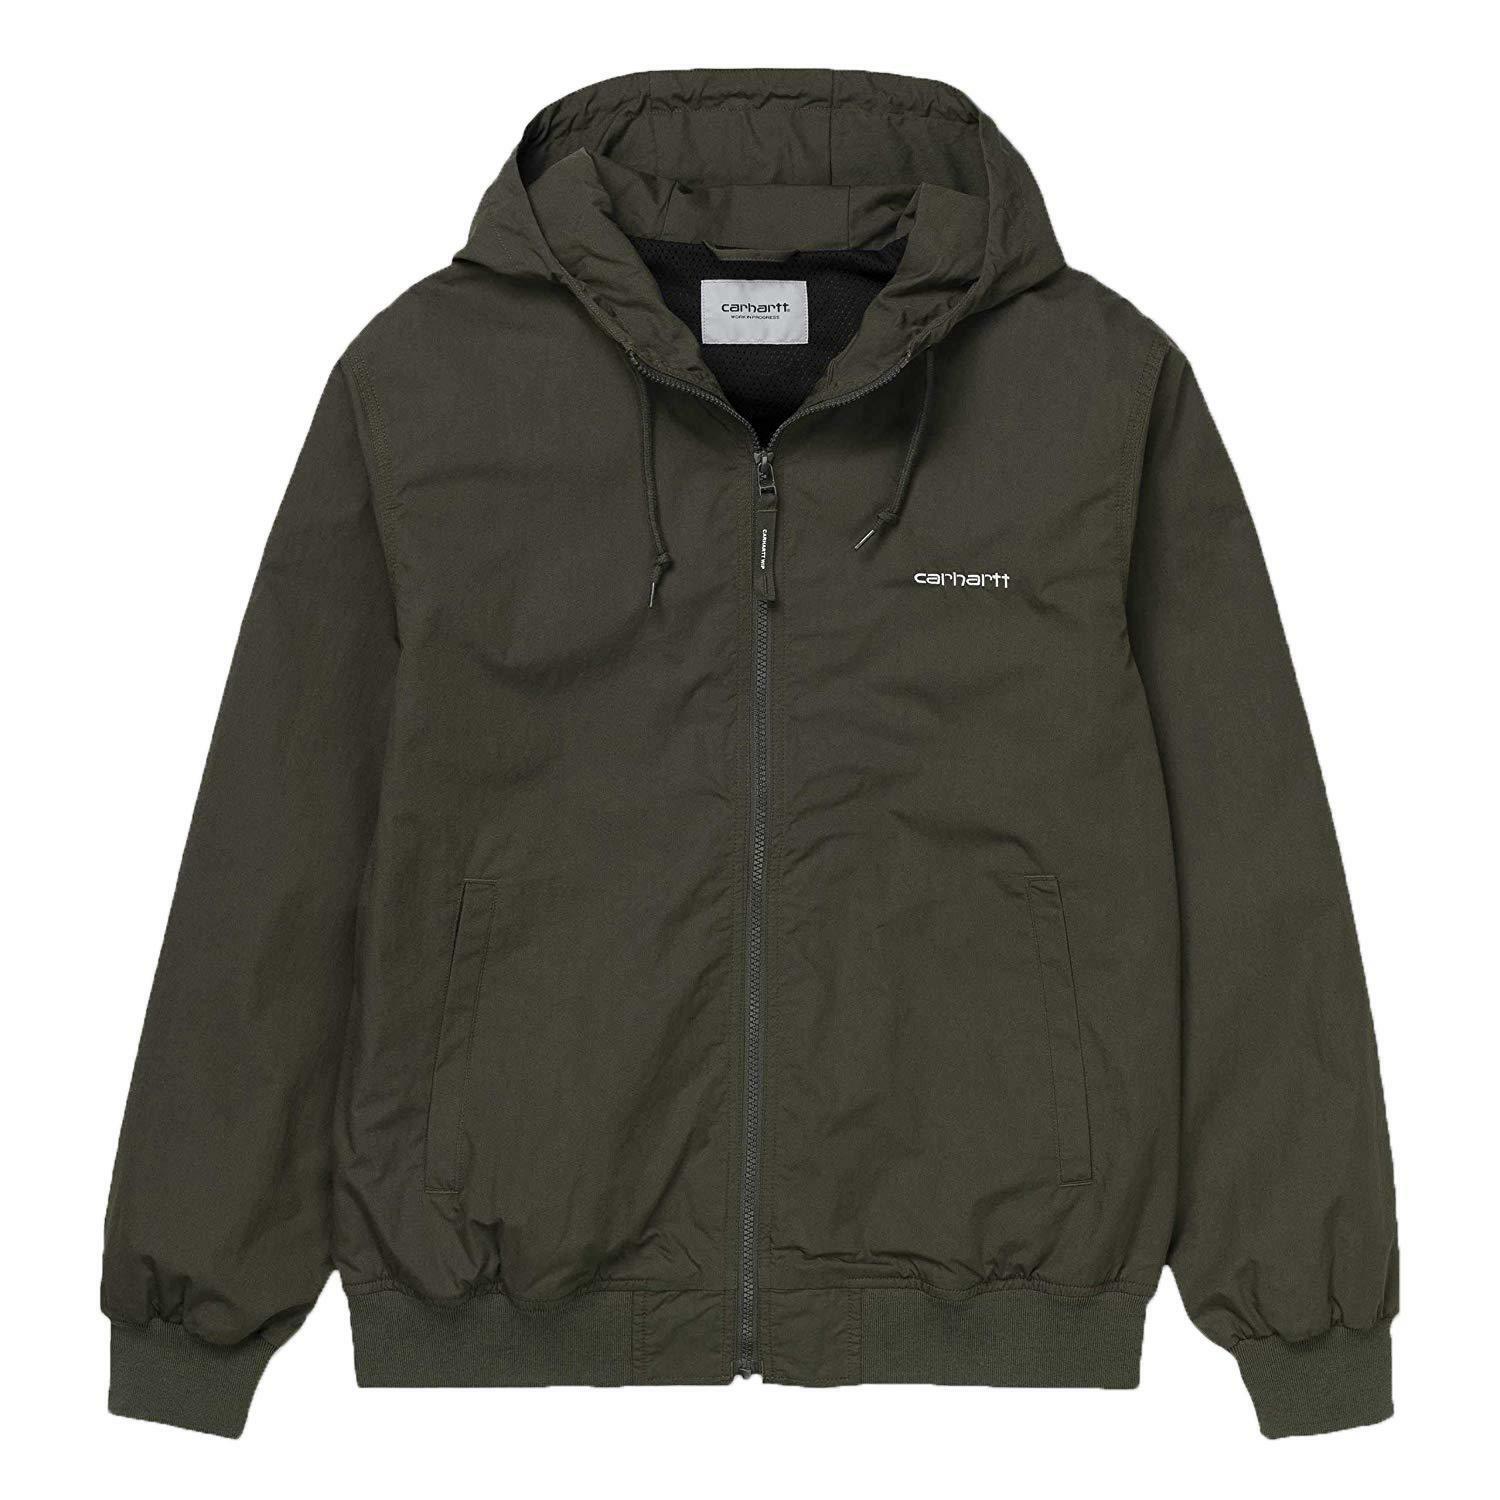 carhartt carhartt marsh jacket giacchetto uomo verde i025756c427